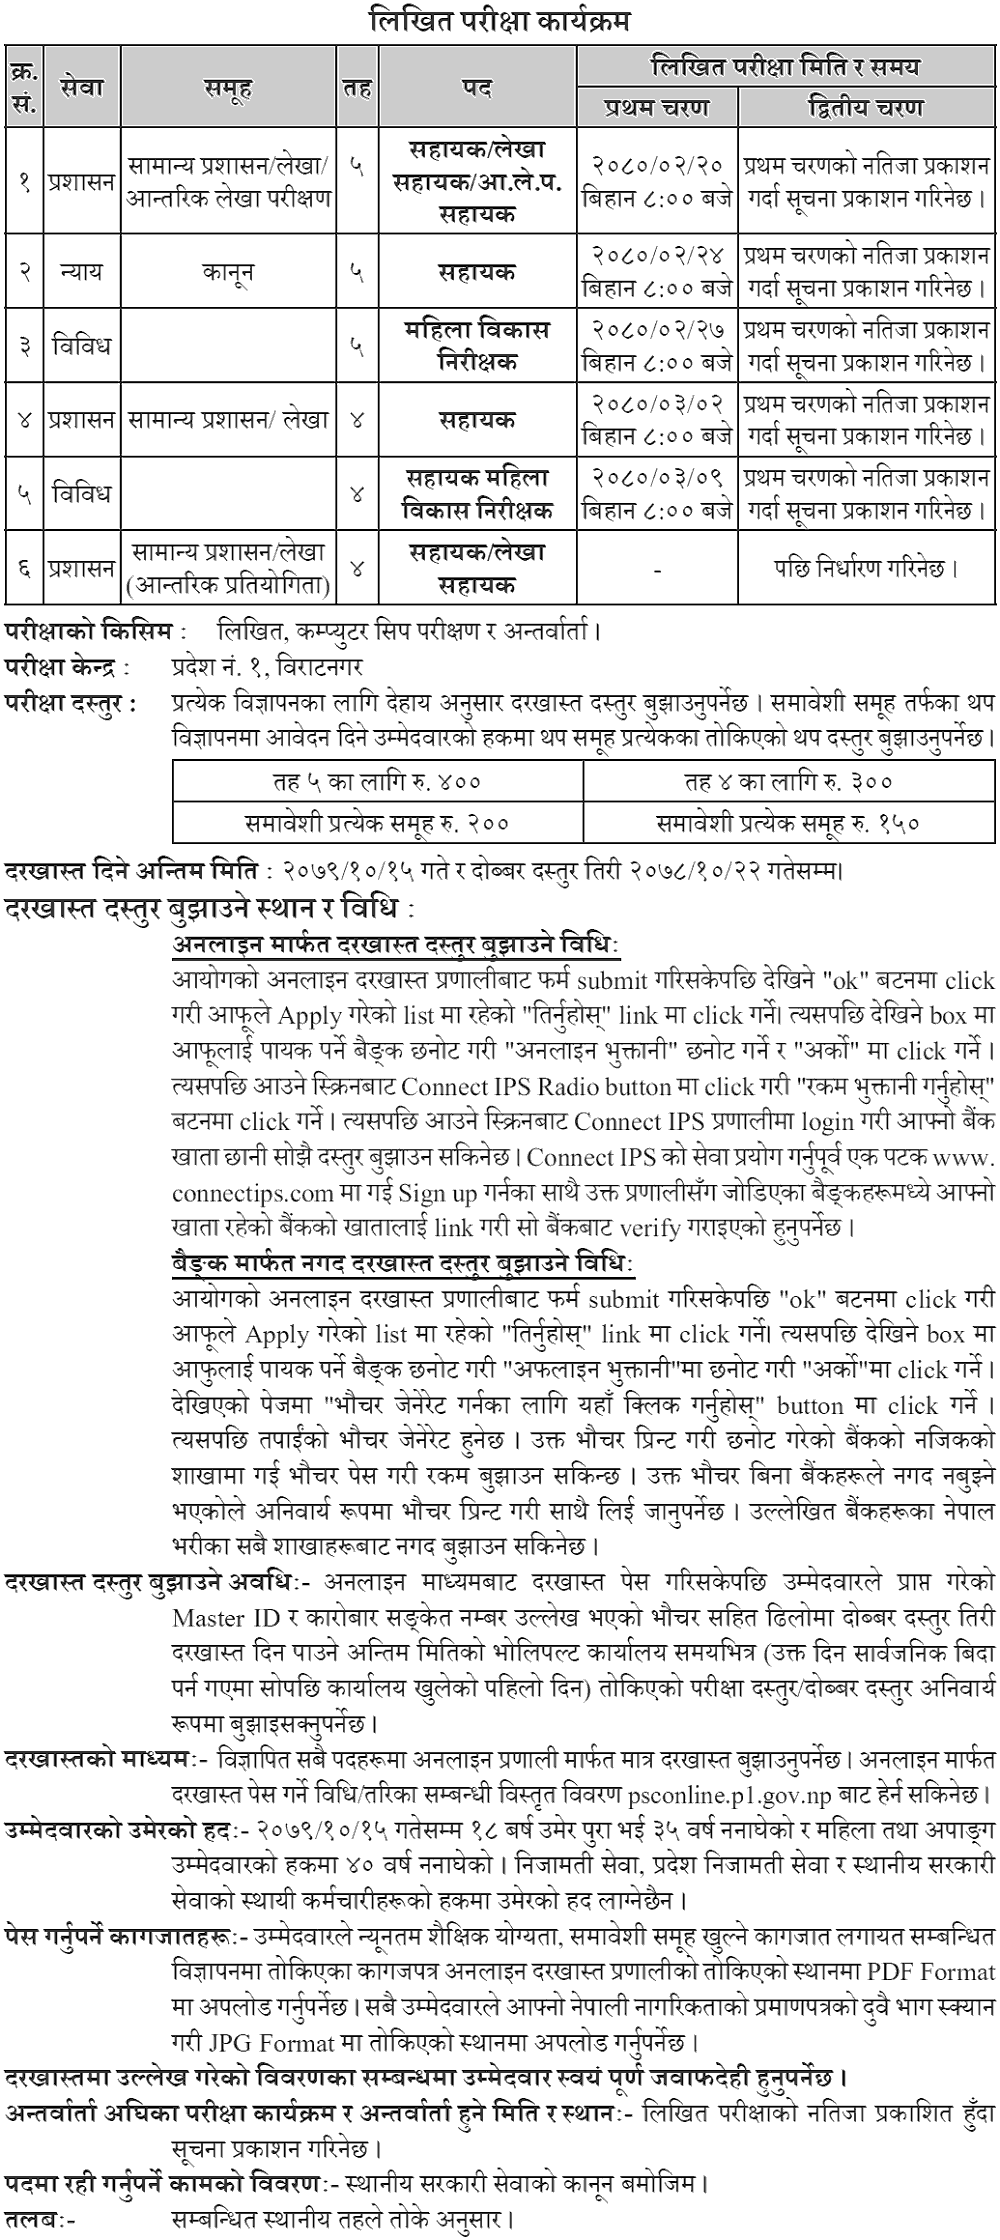 View Pradesh 1 Lok Sewa Aayog job Vacancy Notice 2079